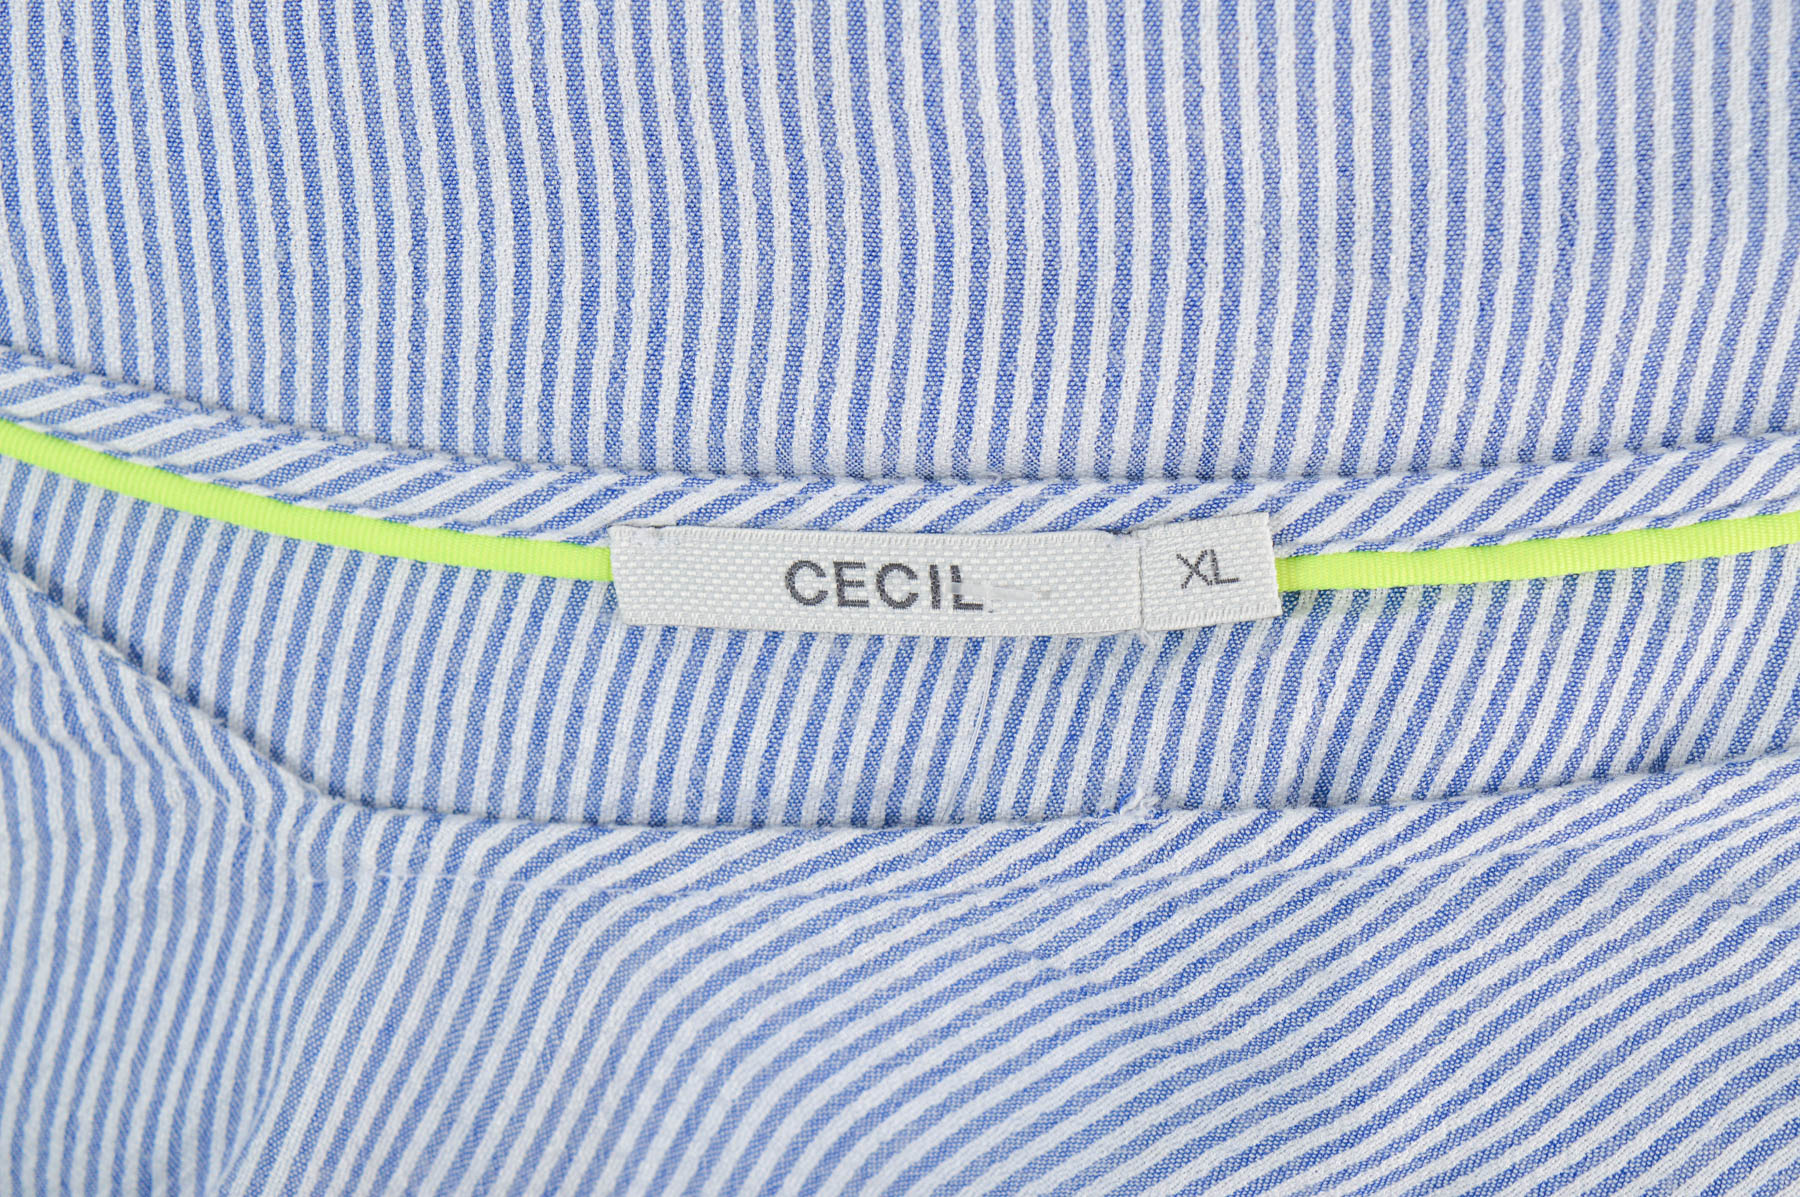 Women's shirt - CECIL - 2